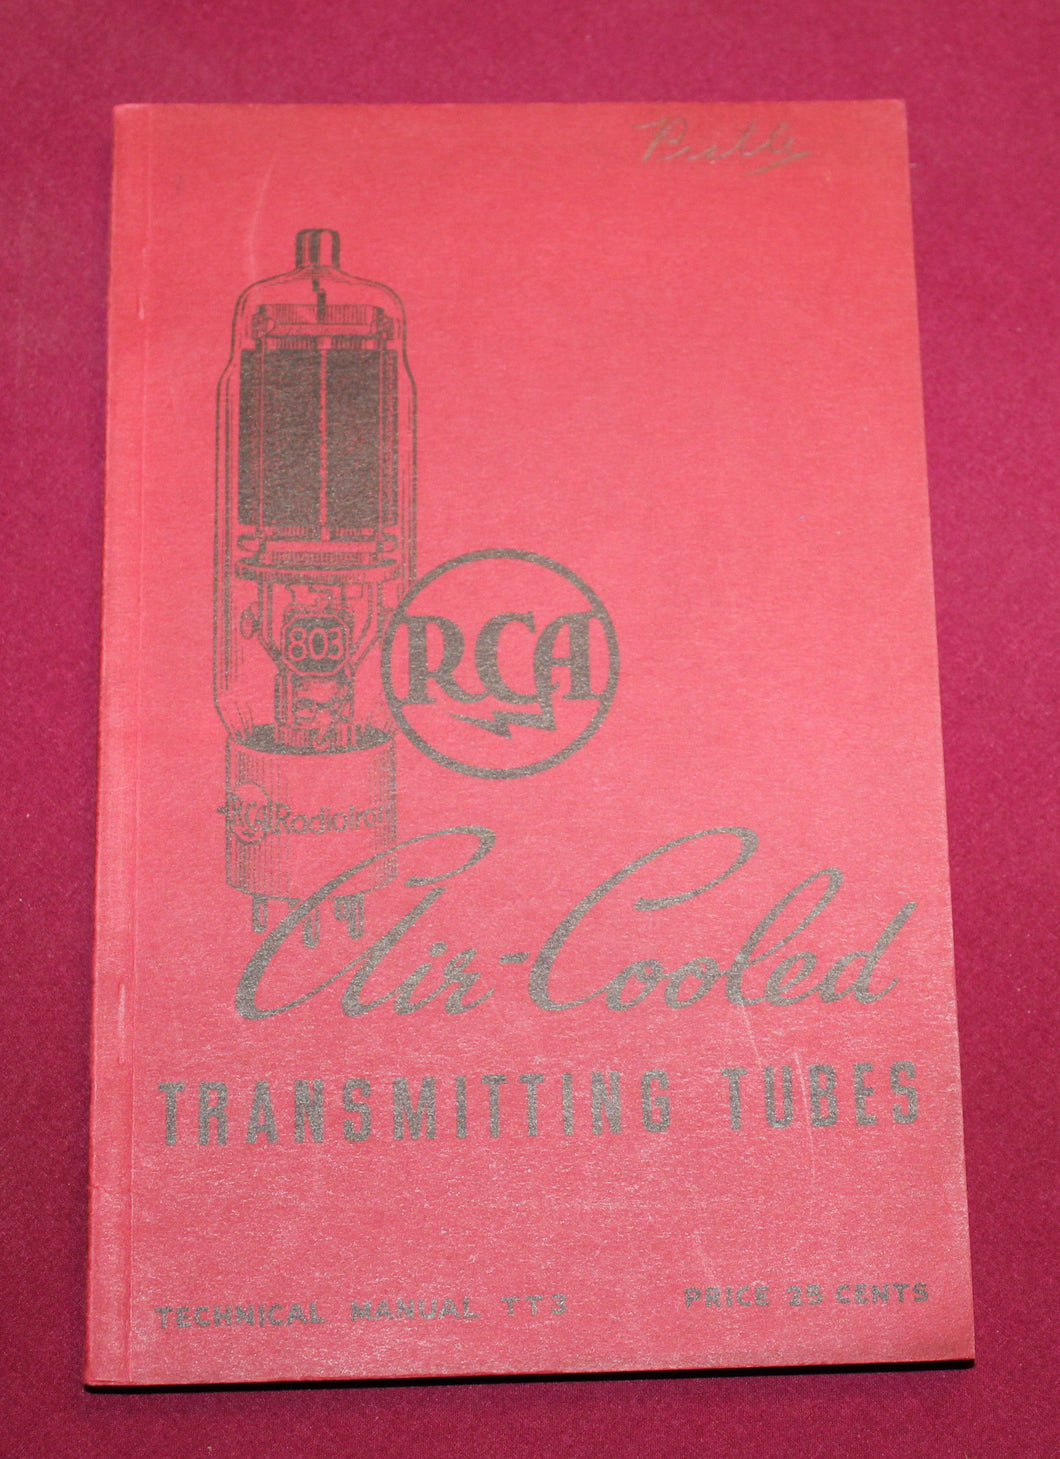 Original 1938 Rca Air Cooled Transmitting Tubes Technical Manual - TT3